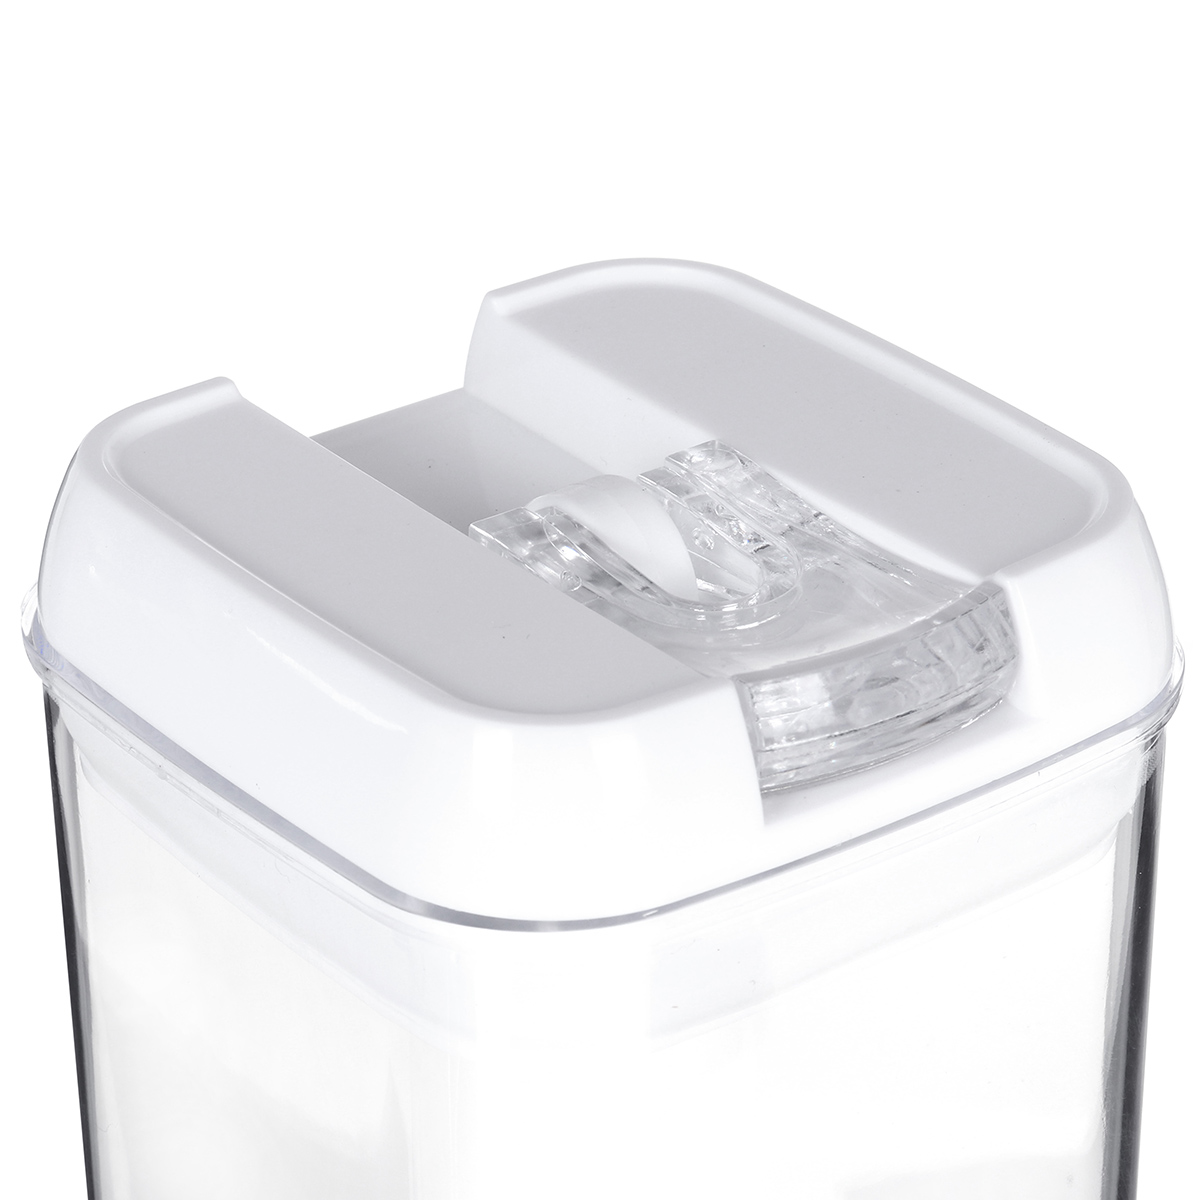 6pcs-Airtight-Refrigerator-Food-Container-Storage-with-Lock-Lids-Plastic-Transparent-Multigrain-Cont-1752734-20